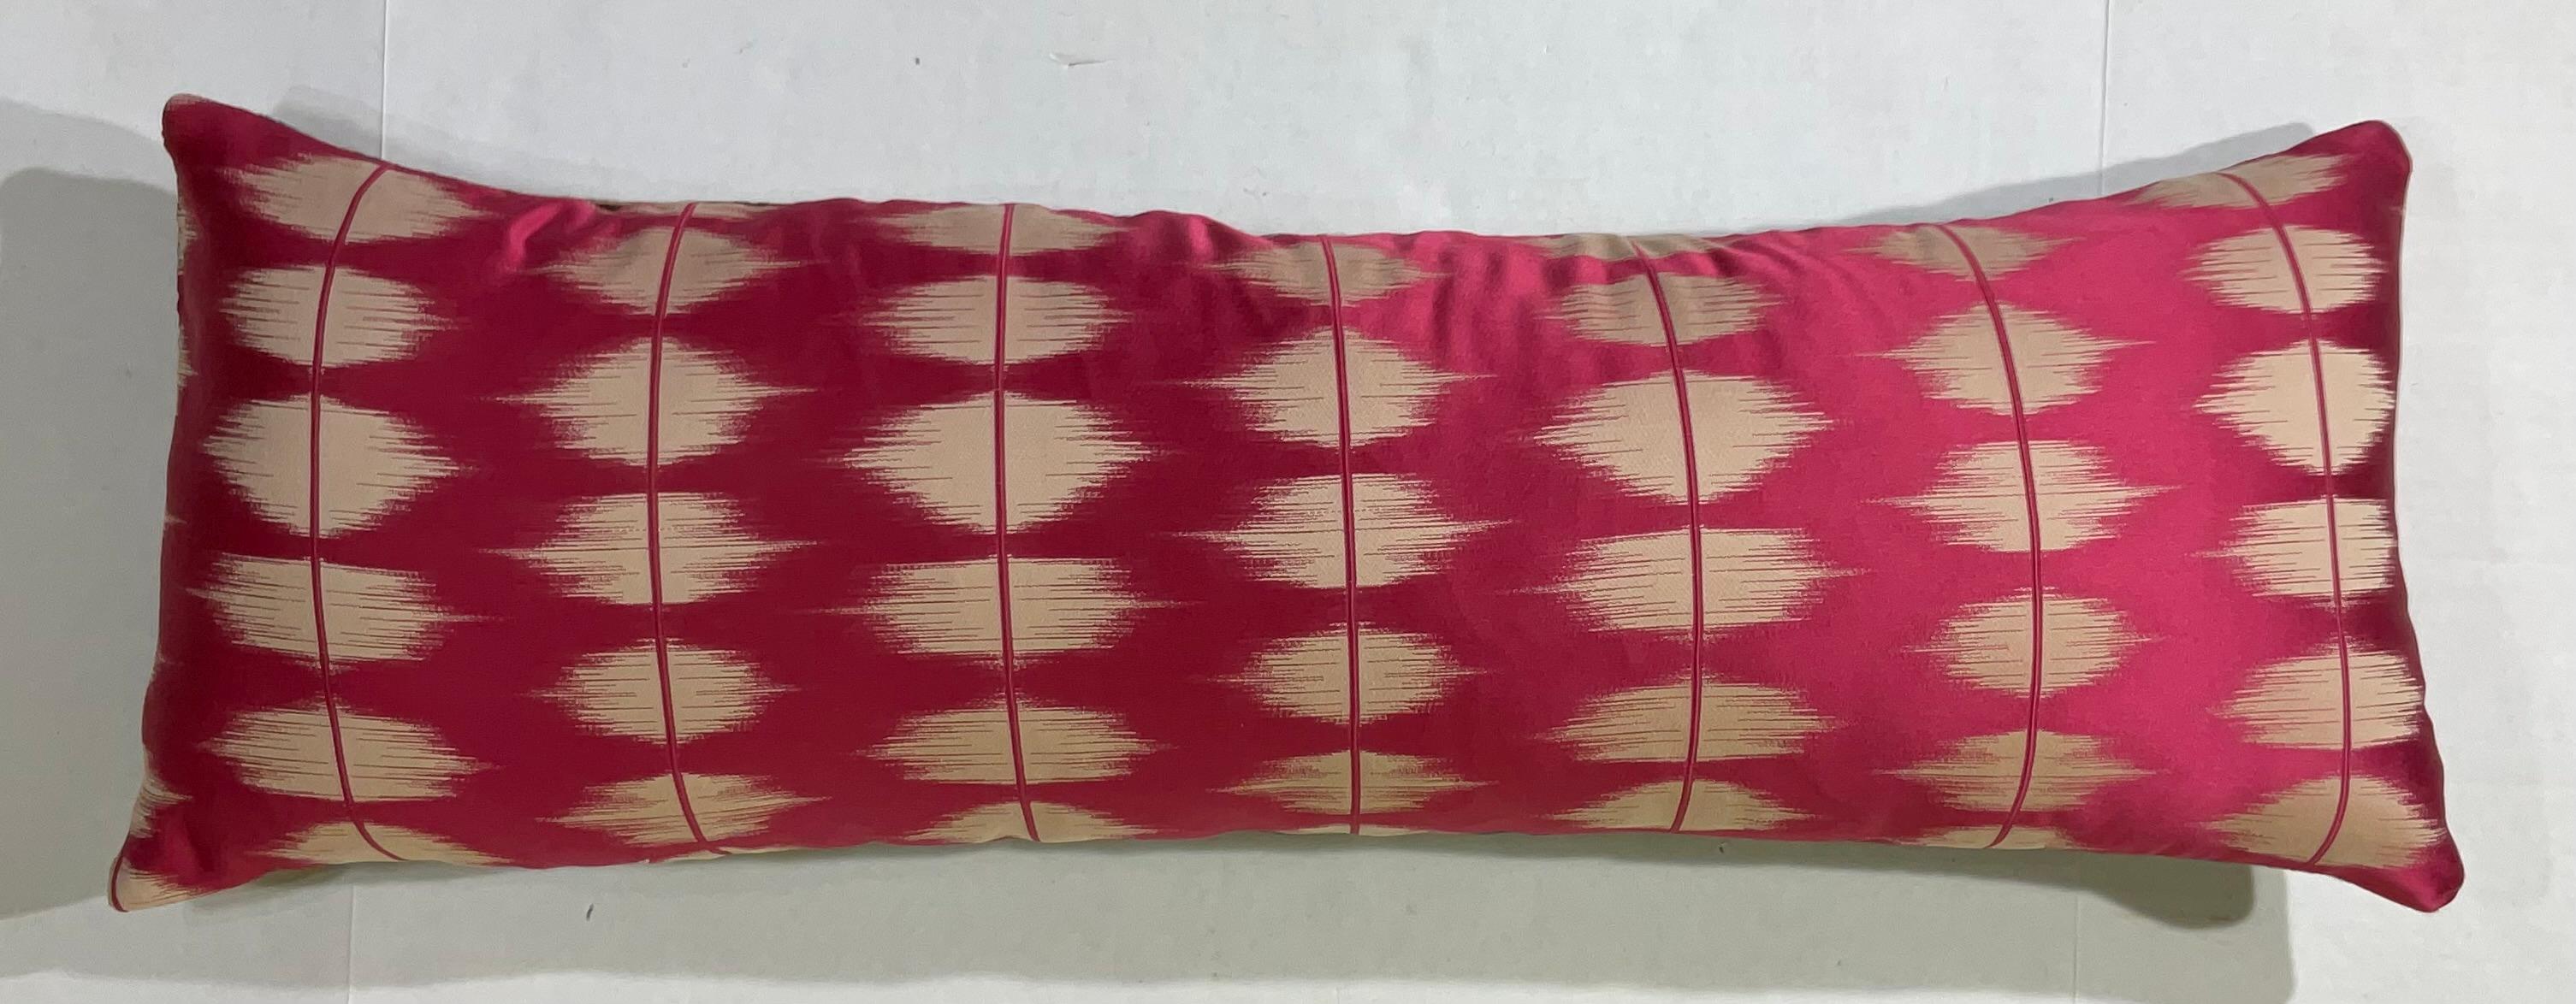 Flat-Weave Geometric Motif Kilim Rug Fragment Pillow For Sale 2